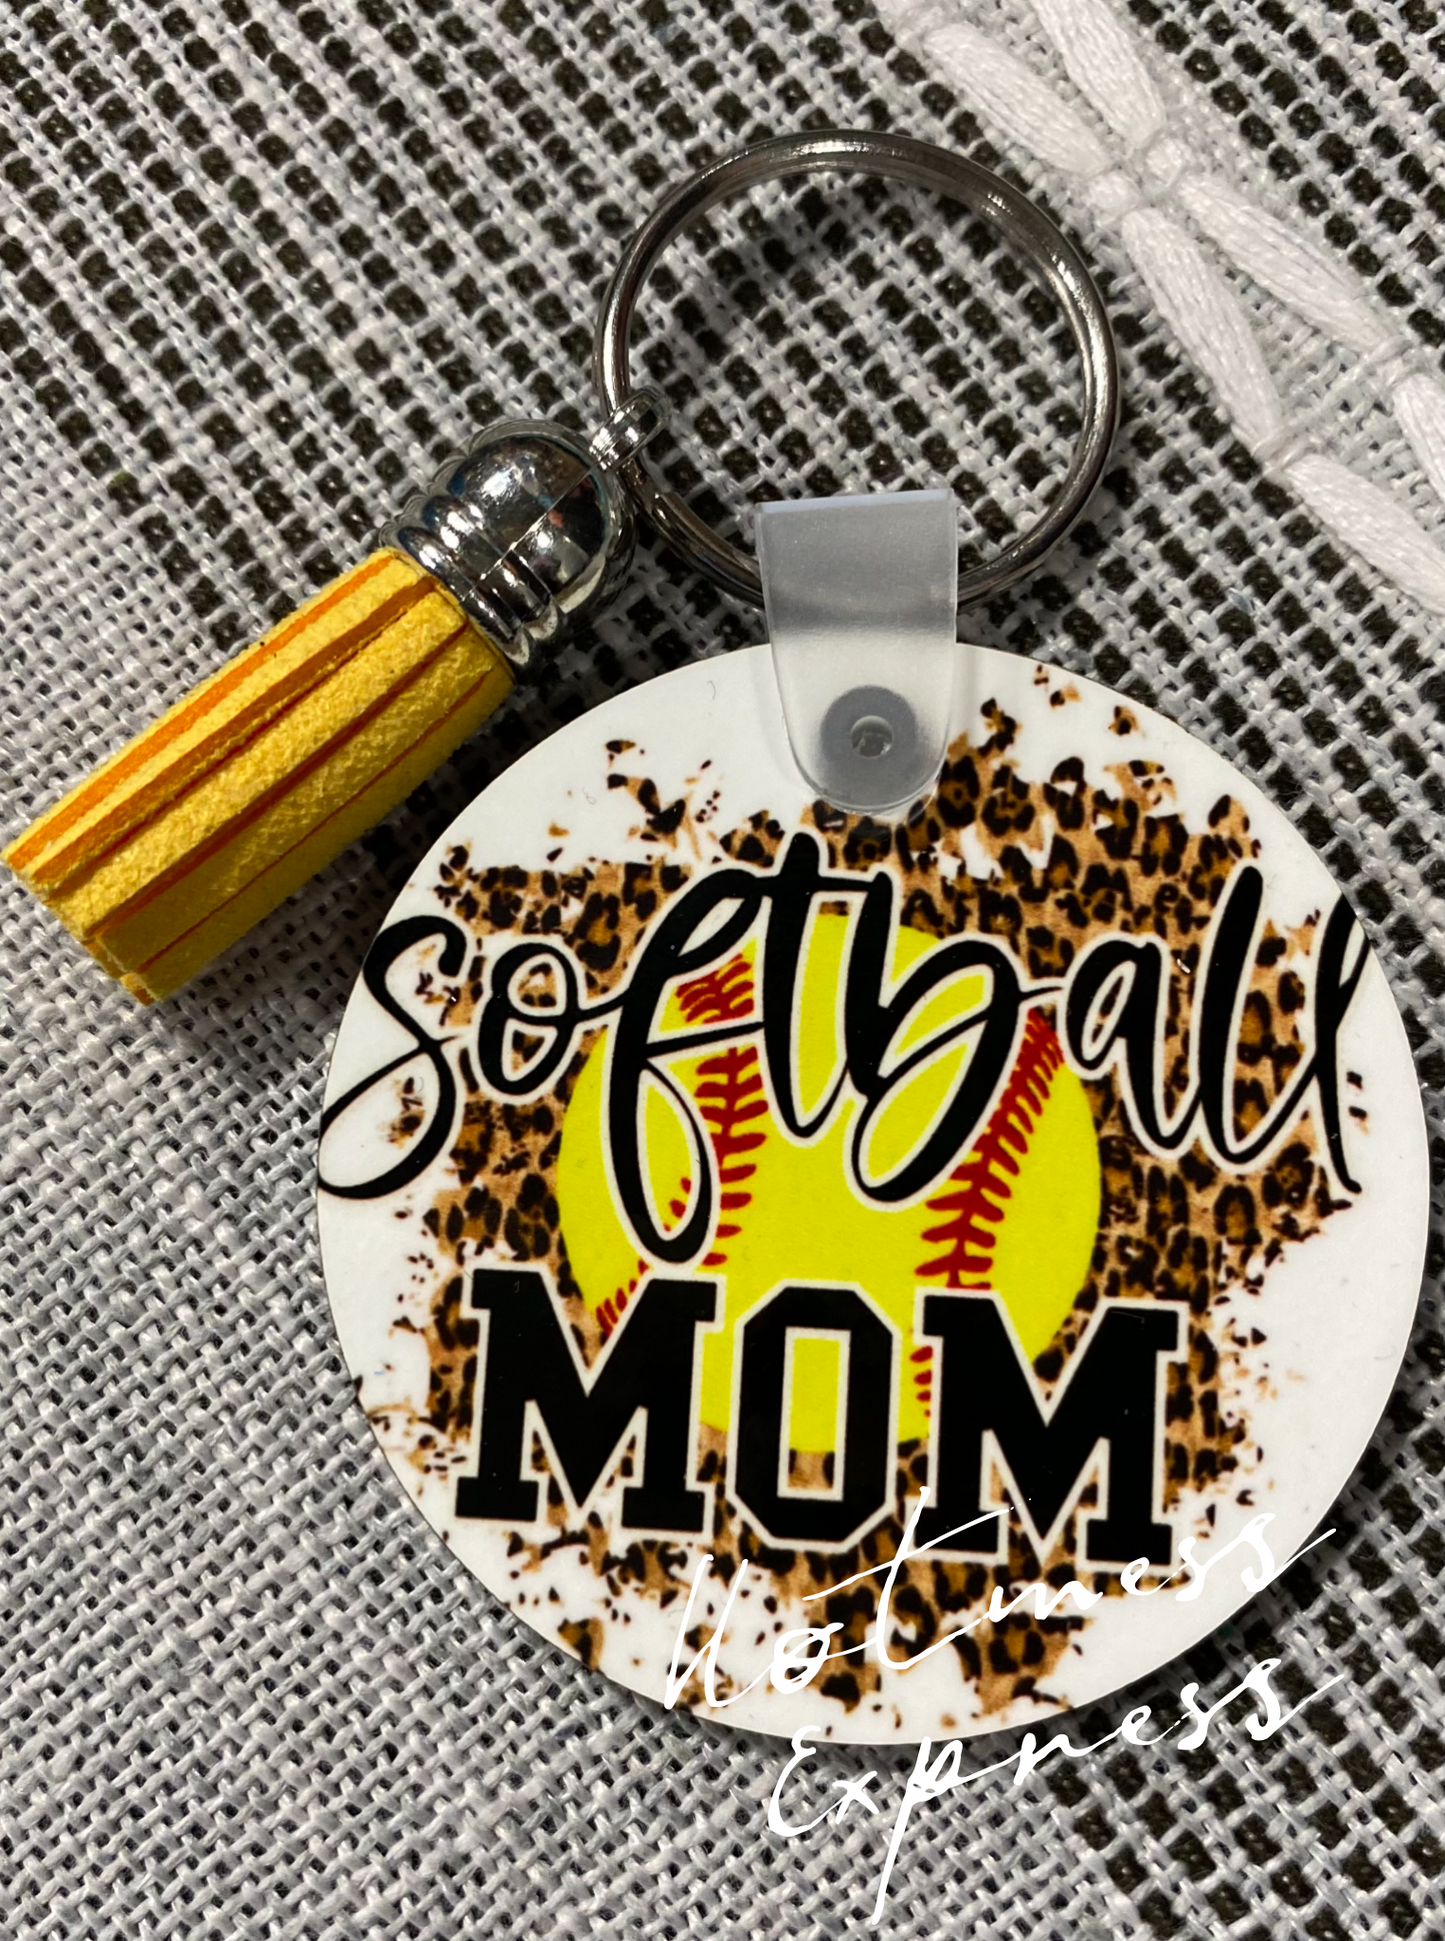 Softball Mom Keychain